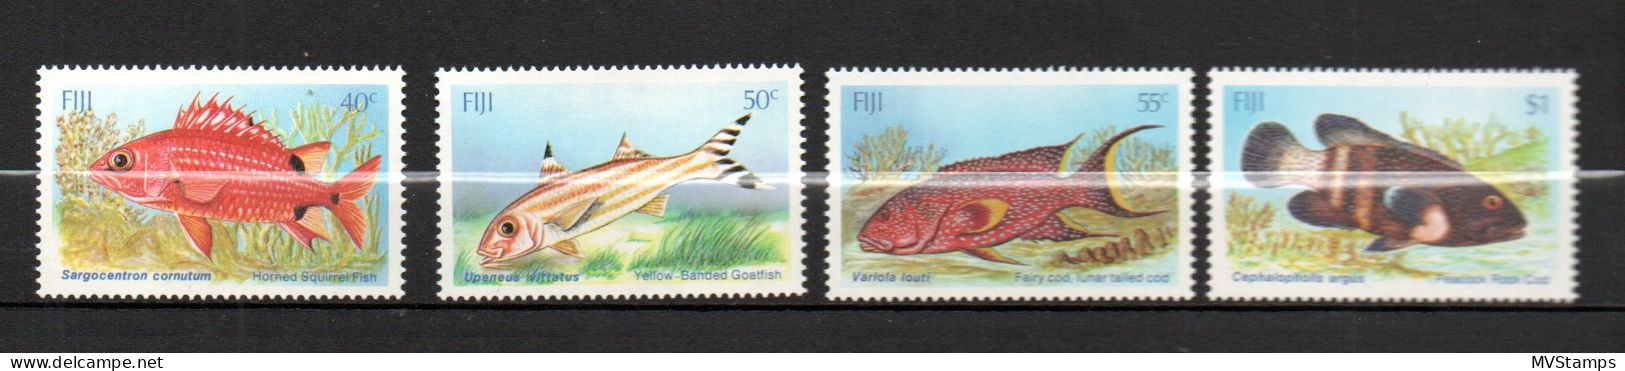 Fiji 1985 Set Fish/Fische Stamps (Michel 530/33) MNH - Fiji (1970-...)